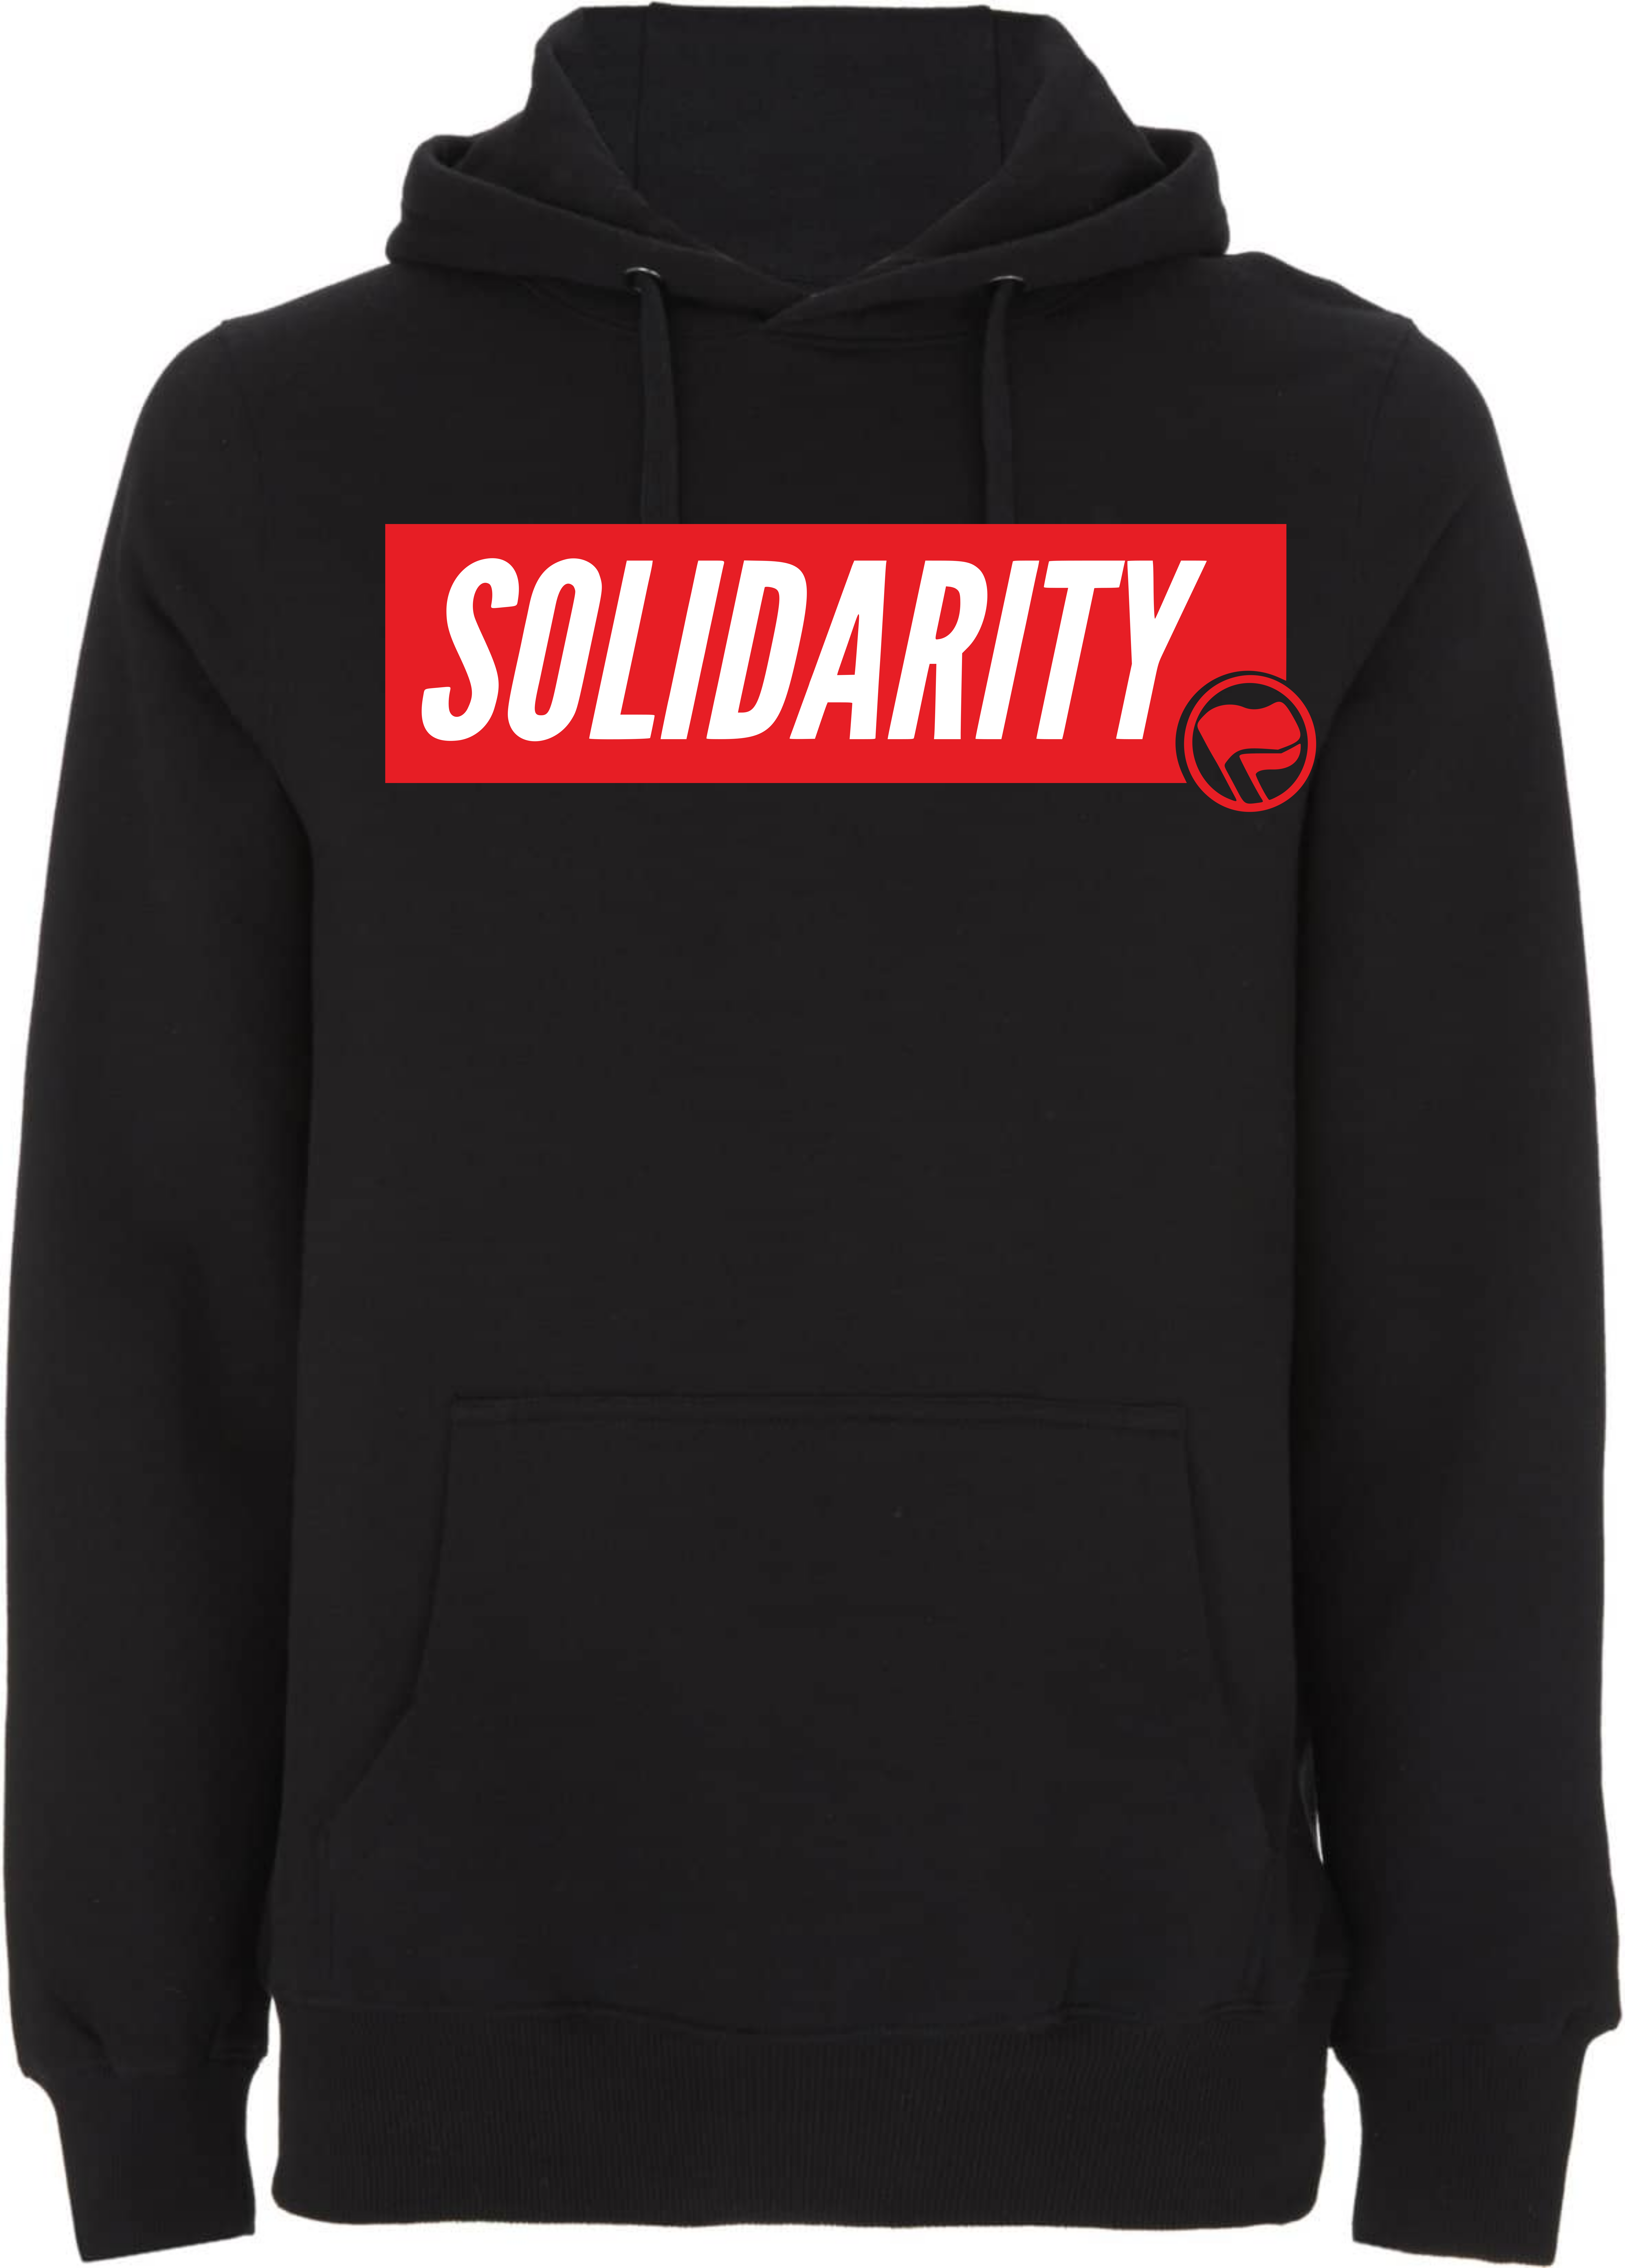 Solidarity | Unisex Pullover